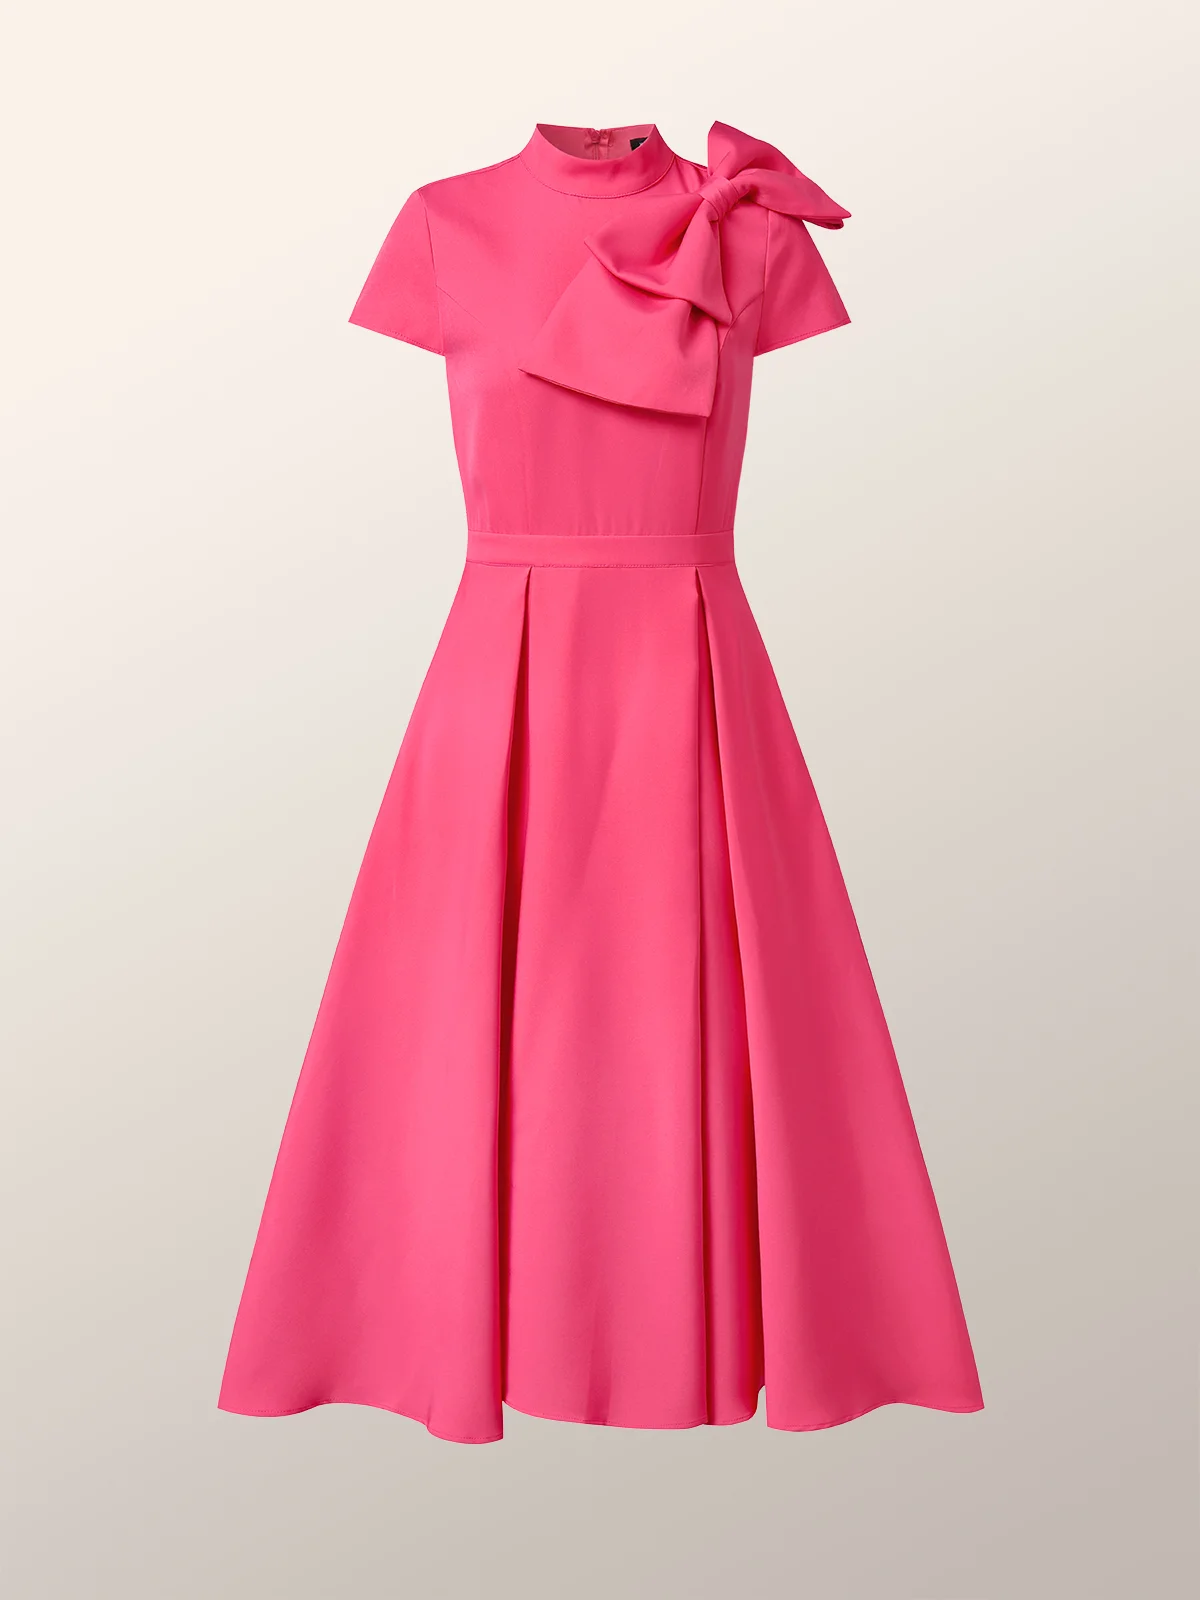 Summer Elegant Short Sleeve Woven Pink Dress Wedding Party